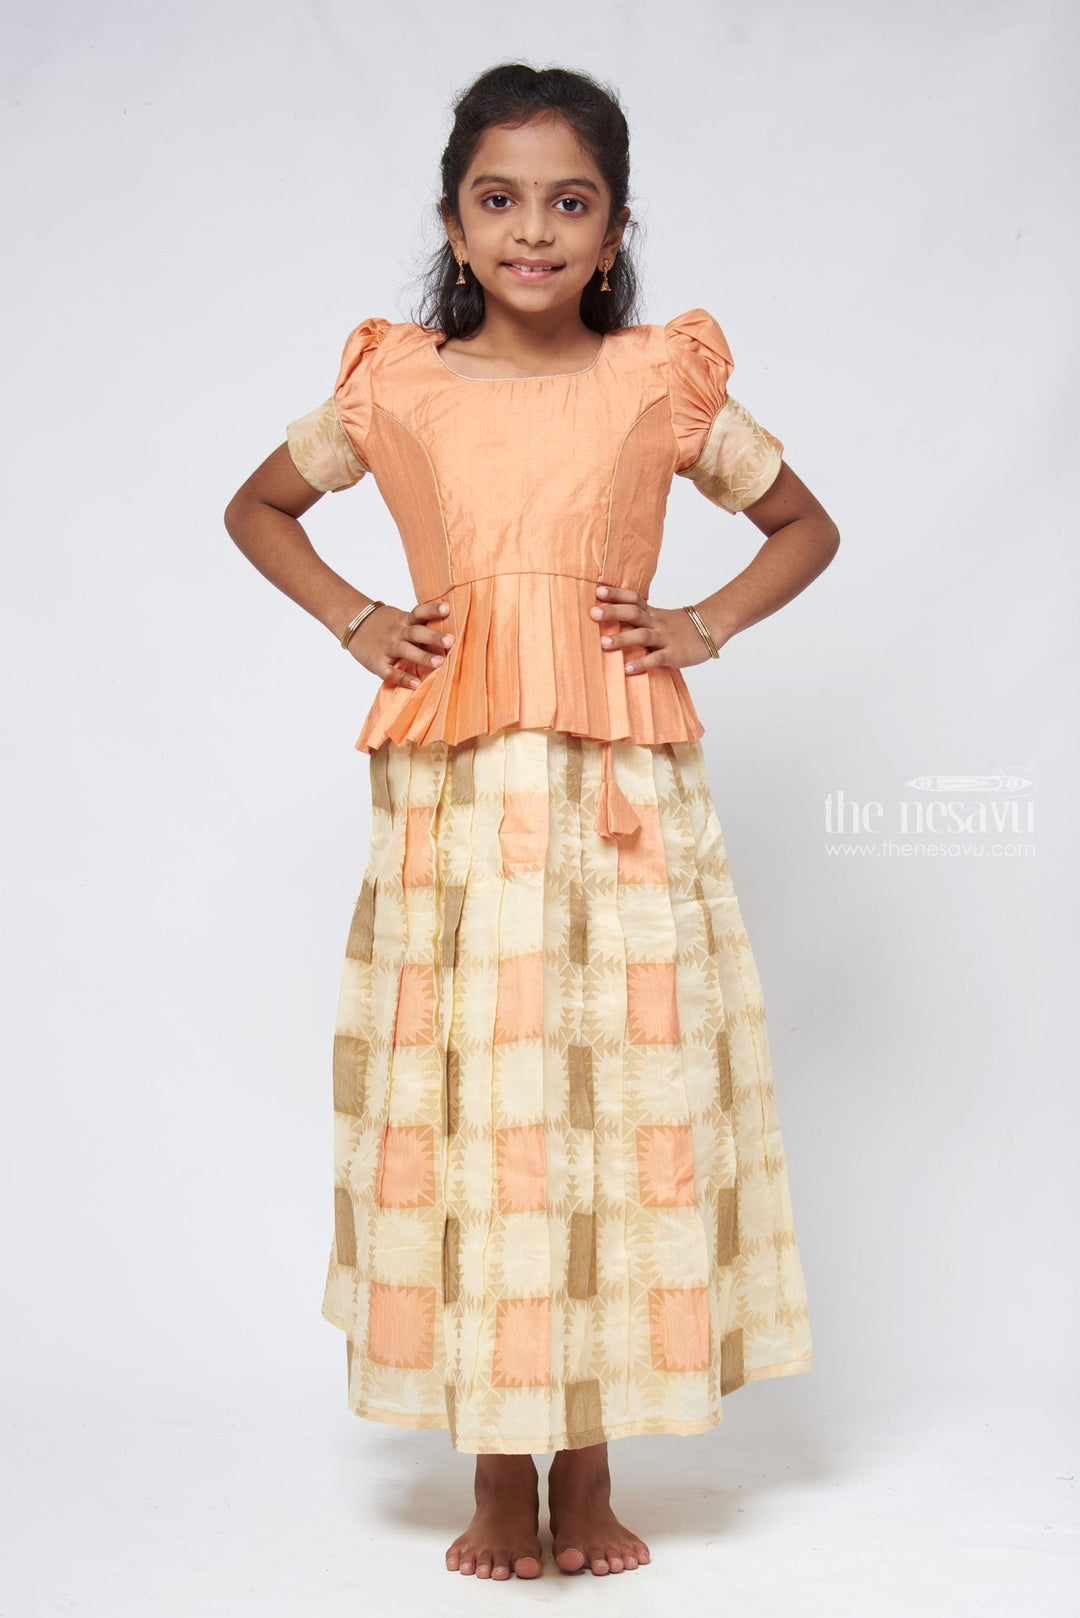 The Nesavu Pattu Pavadai Geometrical Designer Pleated Skirt and Orange Jacquard Silk Blouse Nesavu 16 (1Y) / Orange GPP289D-16 Pattu Pavadai New Design | Girls Traditional Dress | The Nesavu